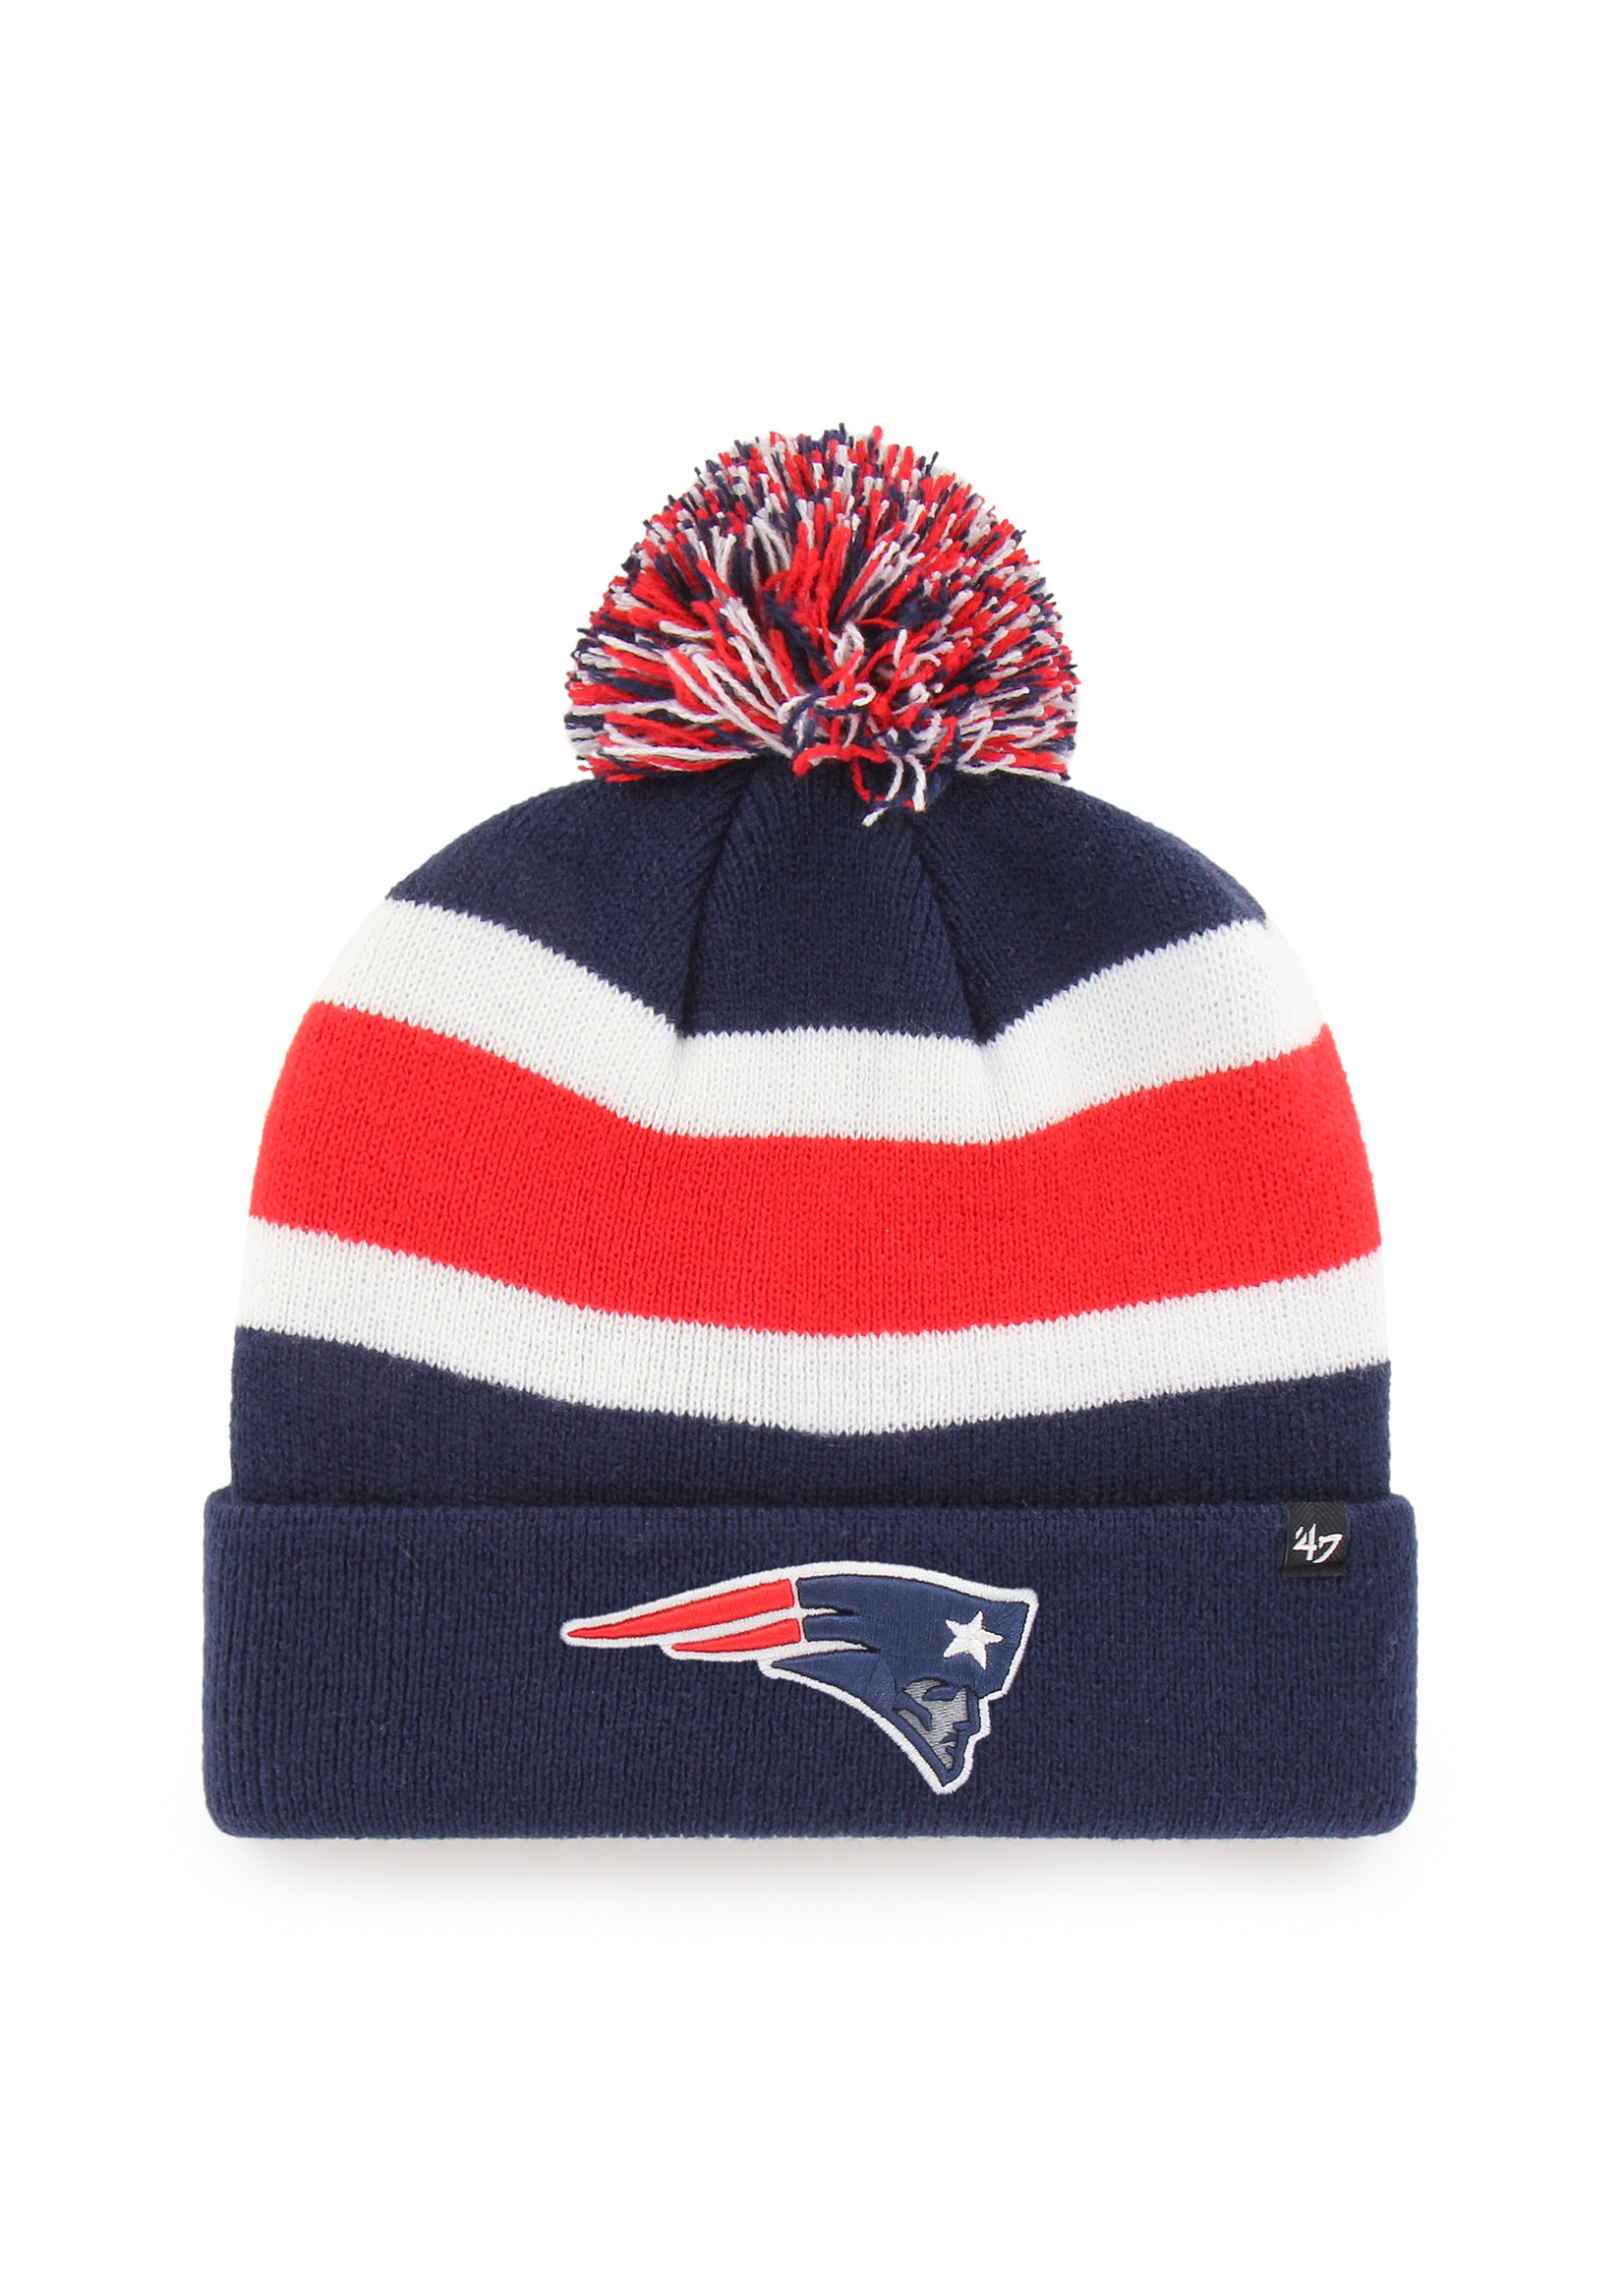 '47 Brand Patriots Pom Pom Winter Hat